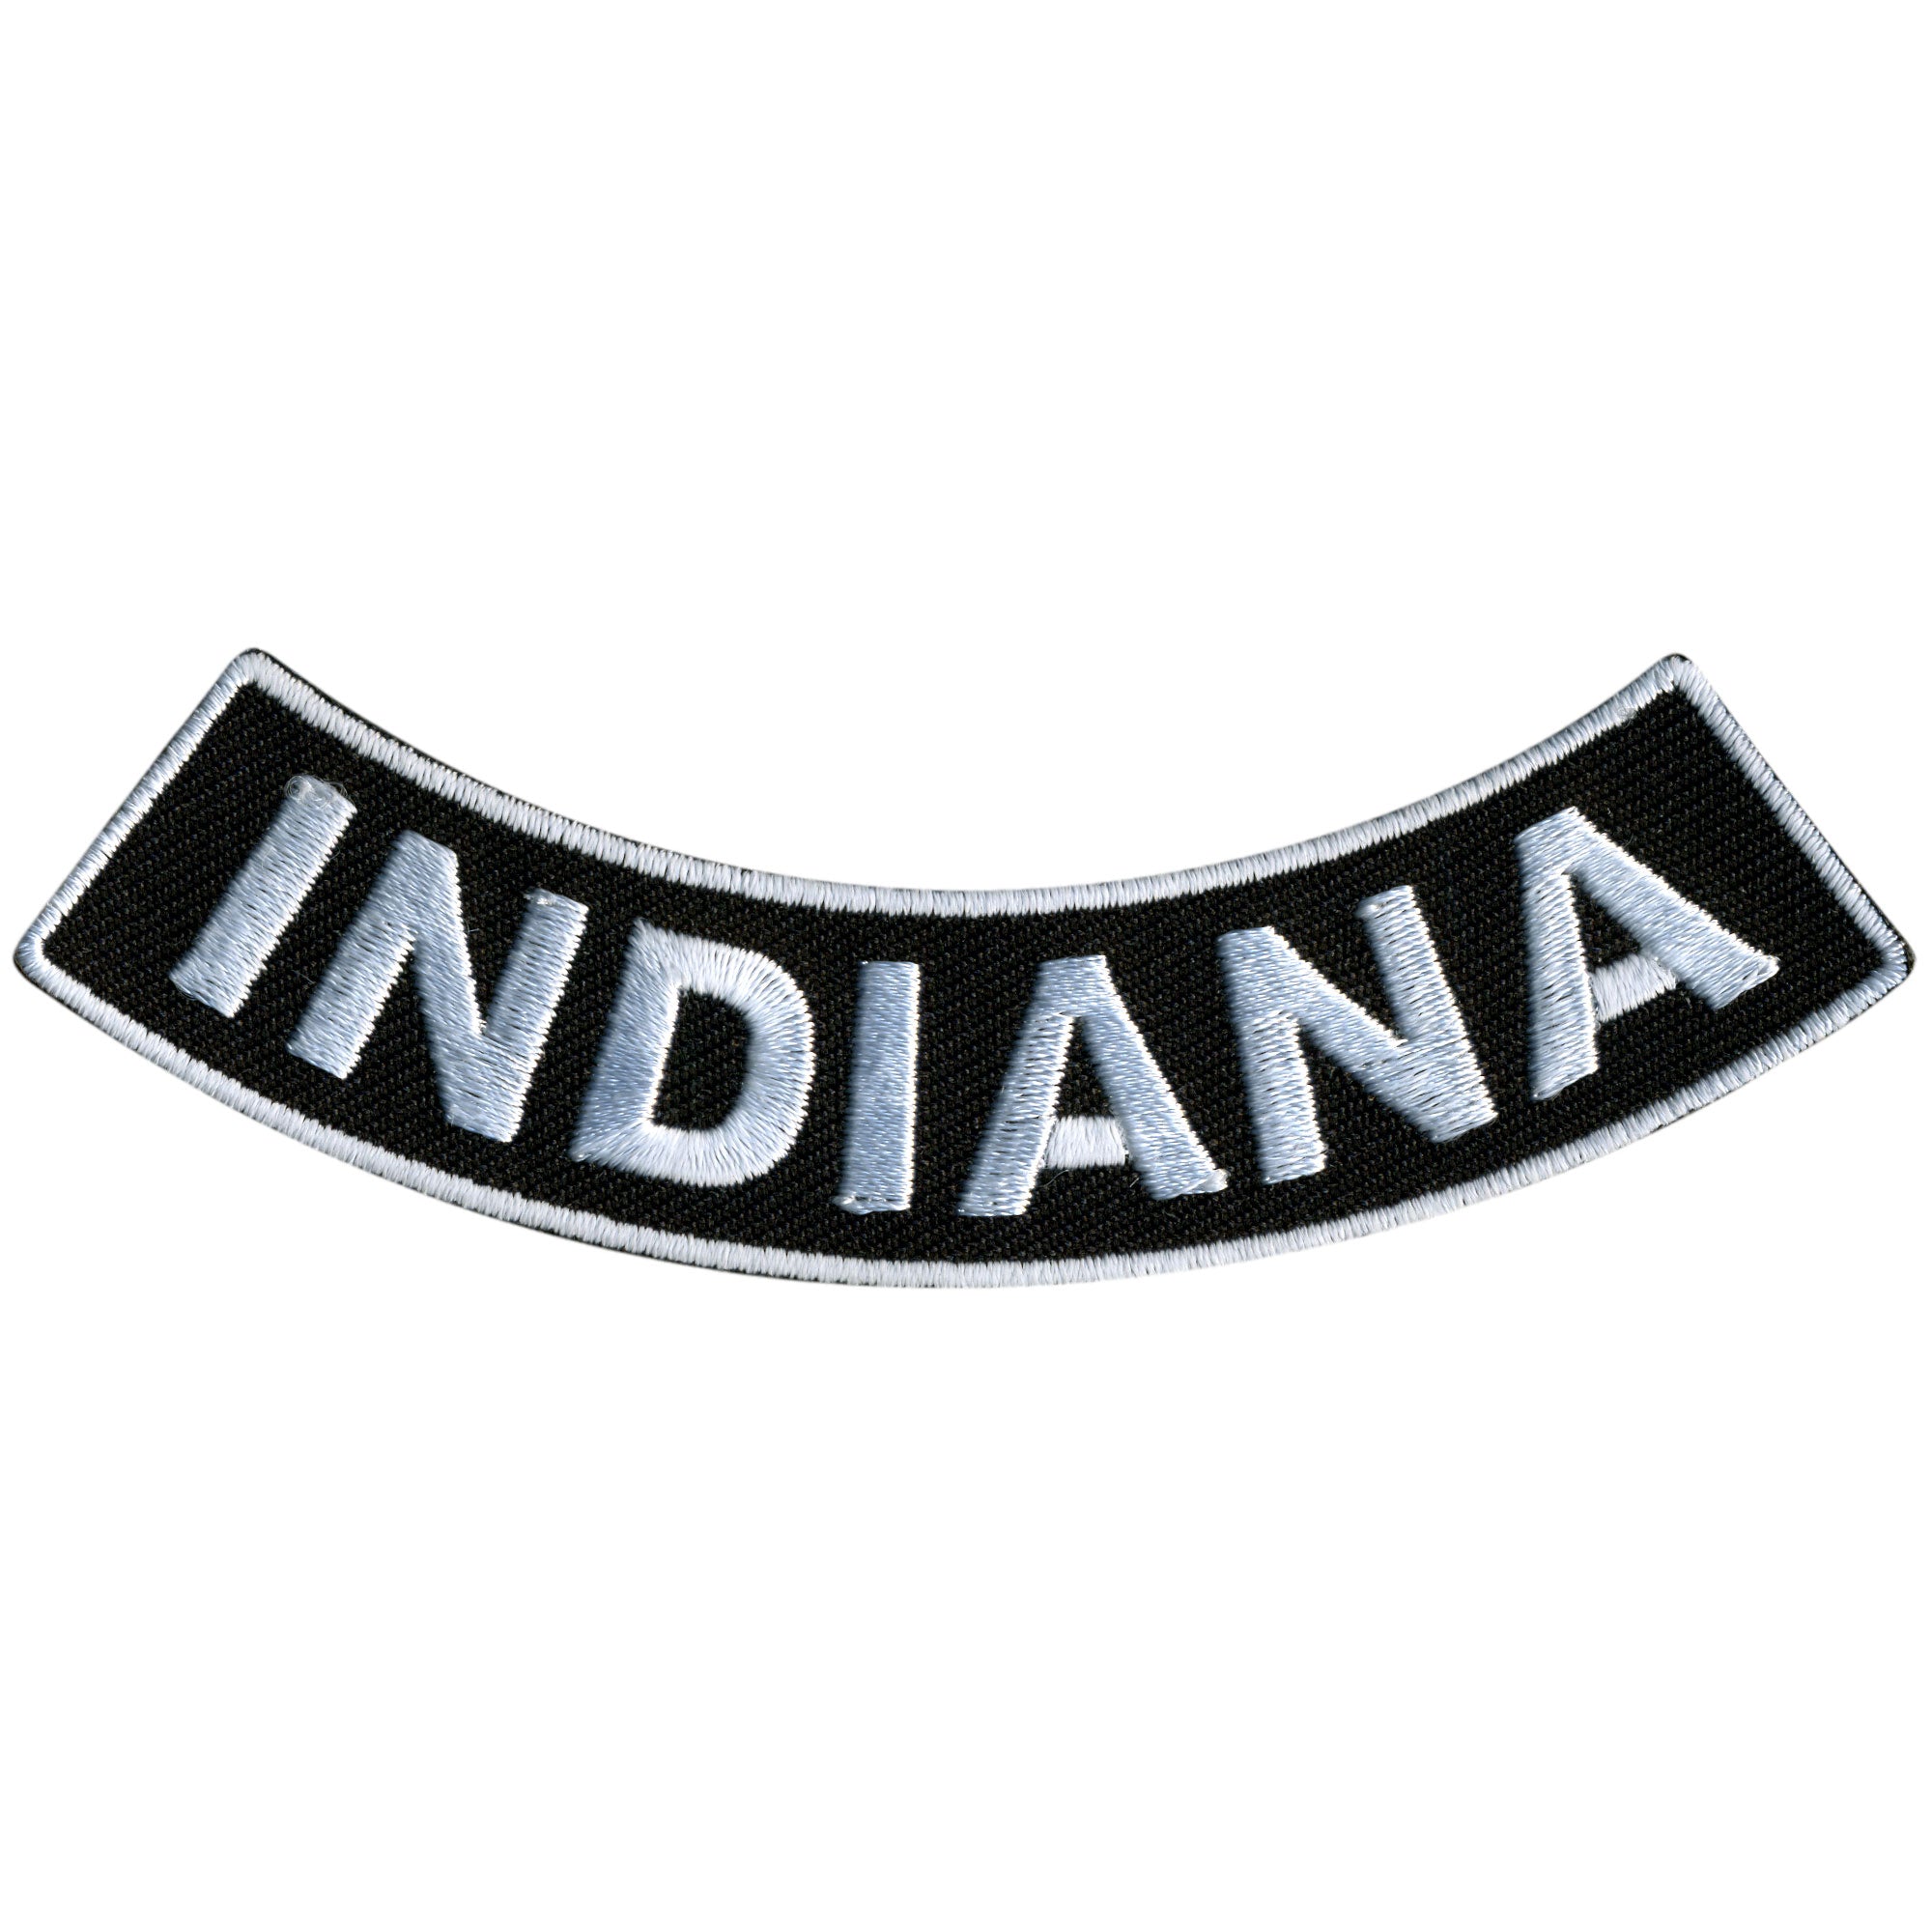 Hot Leathers Indiana 4” X 1” Bottom Rocker Patch